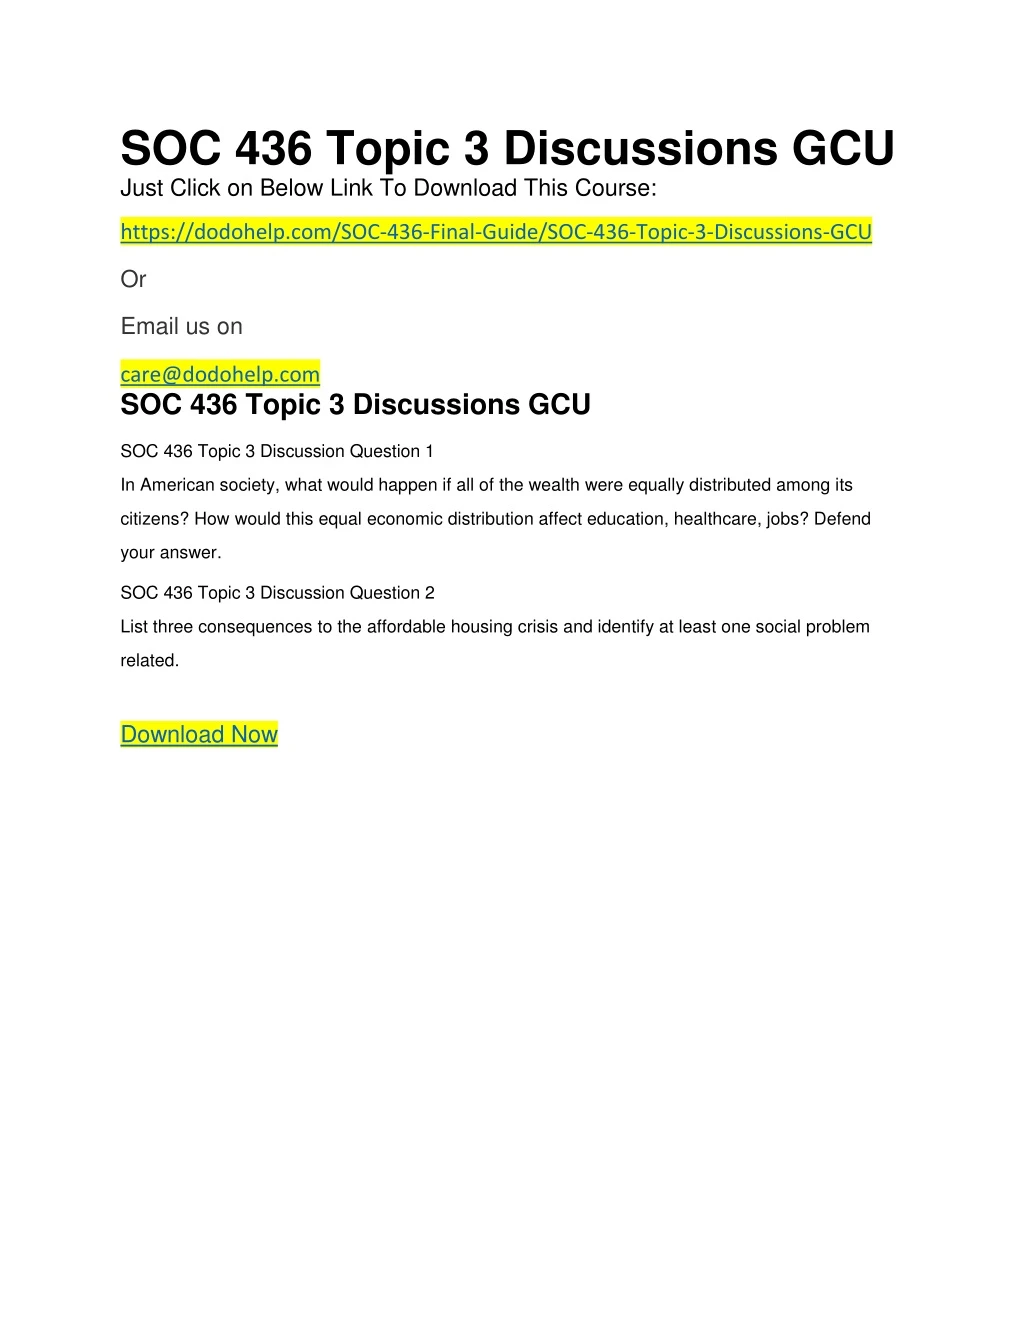 soc 436 topic 3 discussions gcu just click